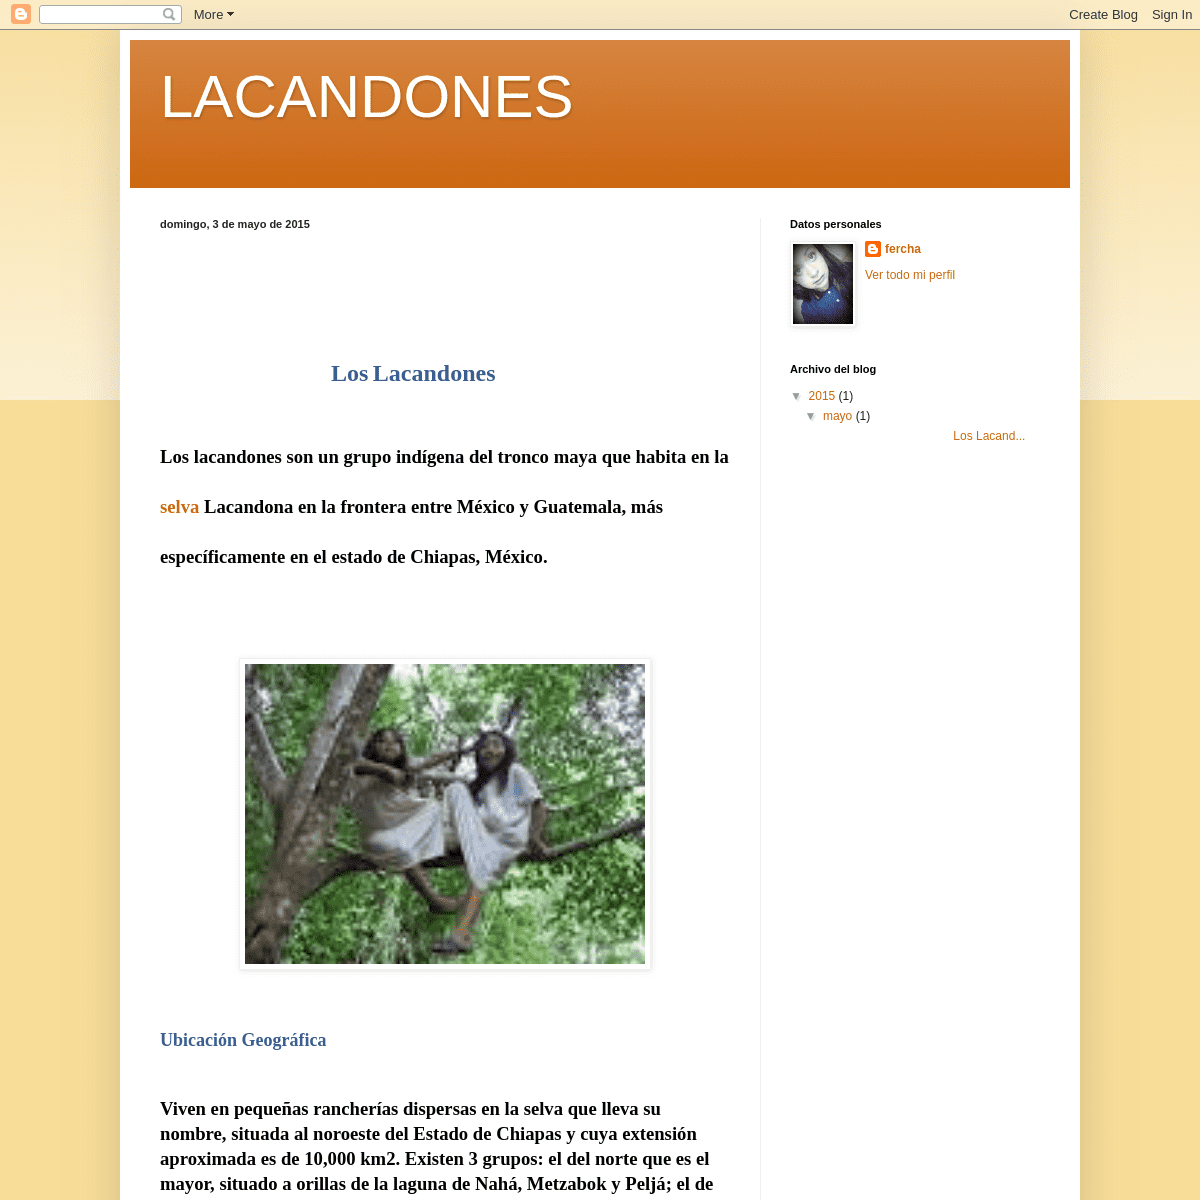 A complete backup of lacandonessables.blogspot.com